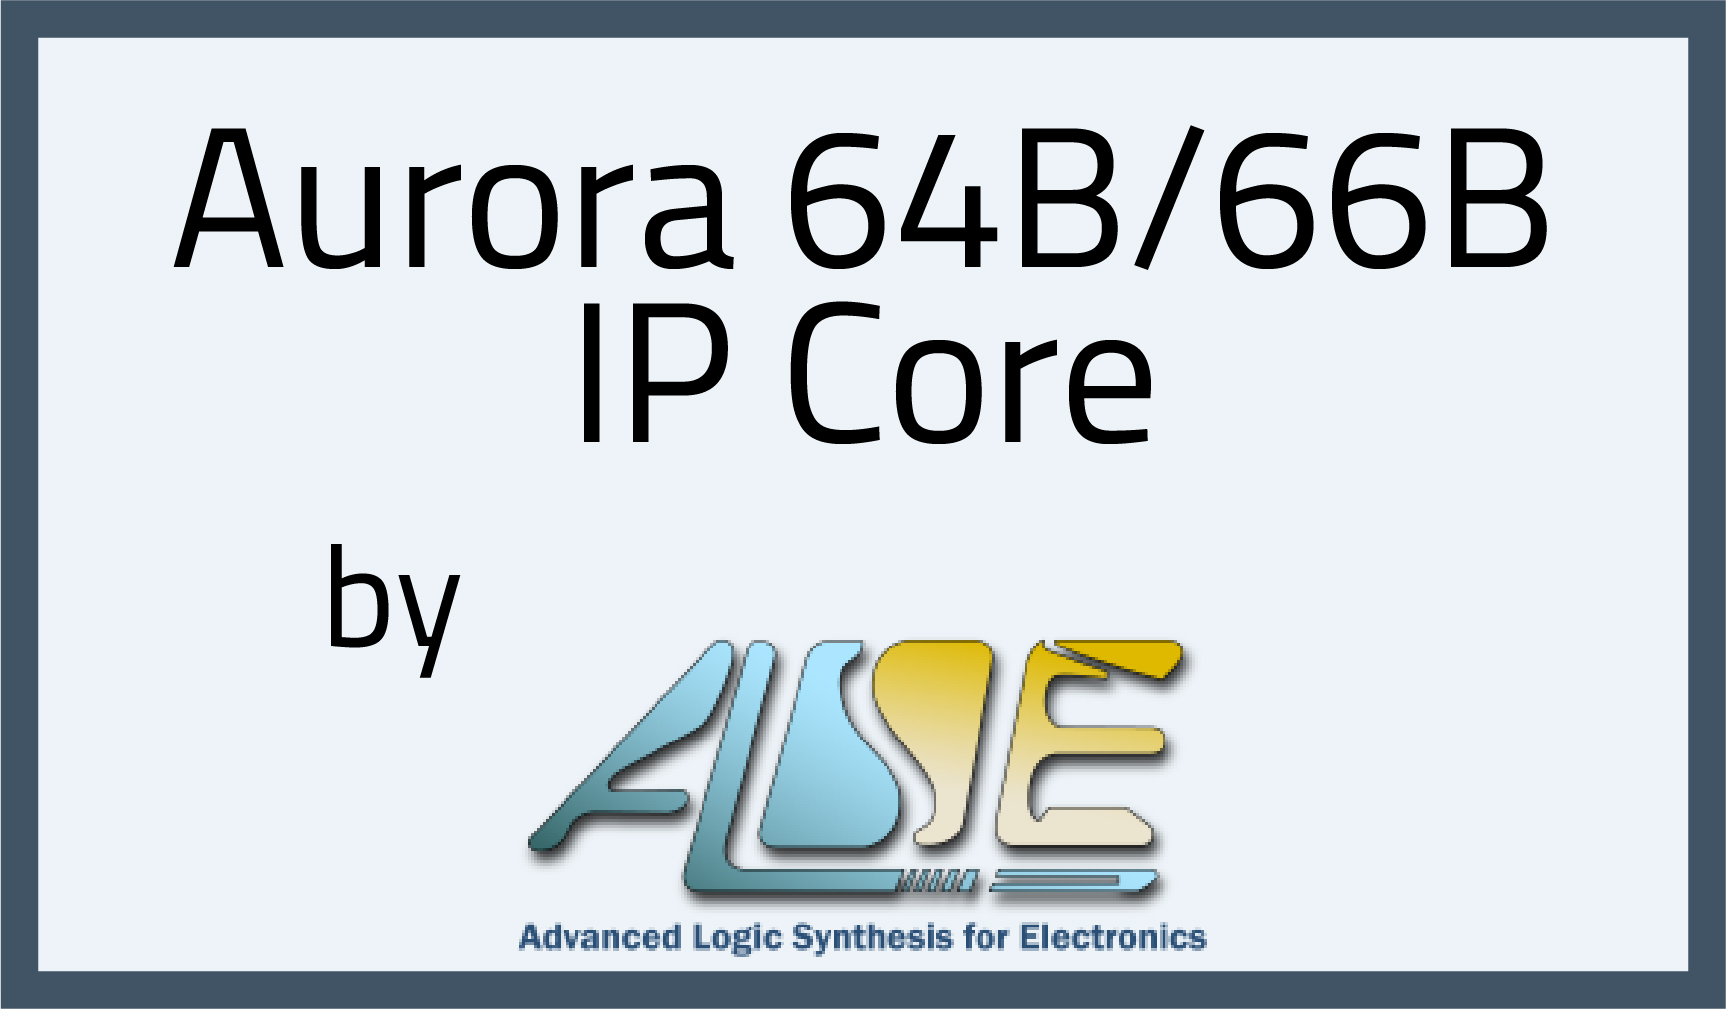 Aurora 64B/66B IP Core